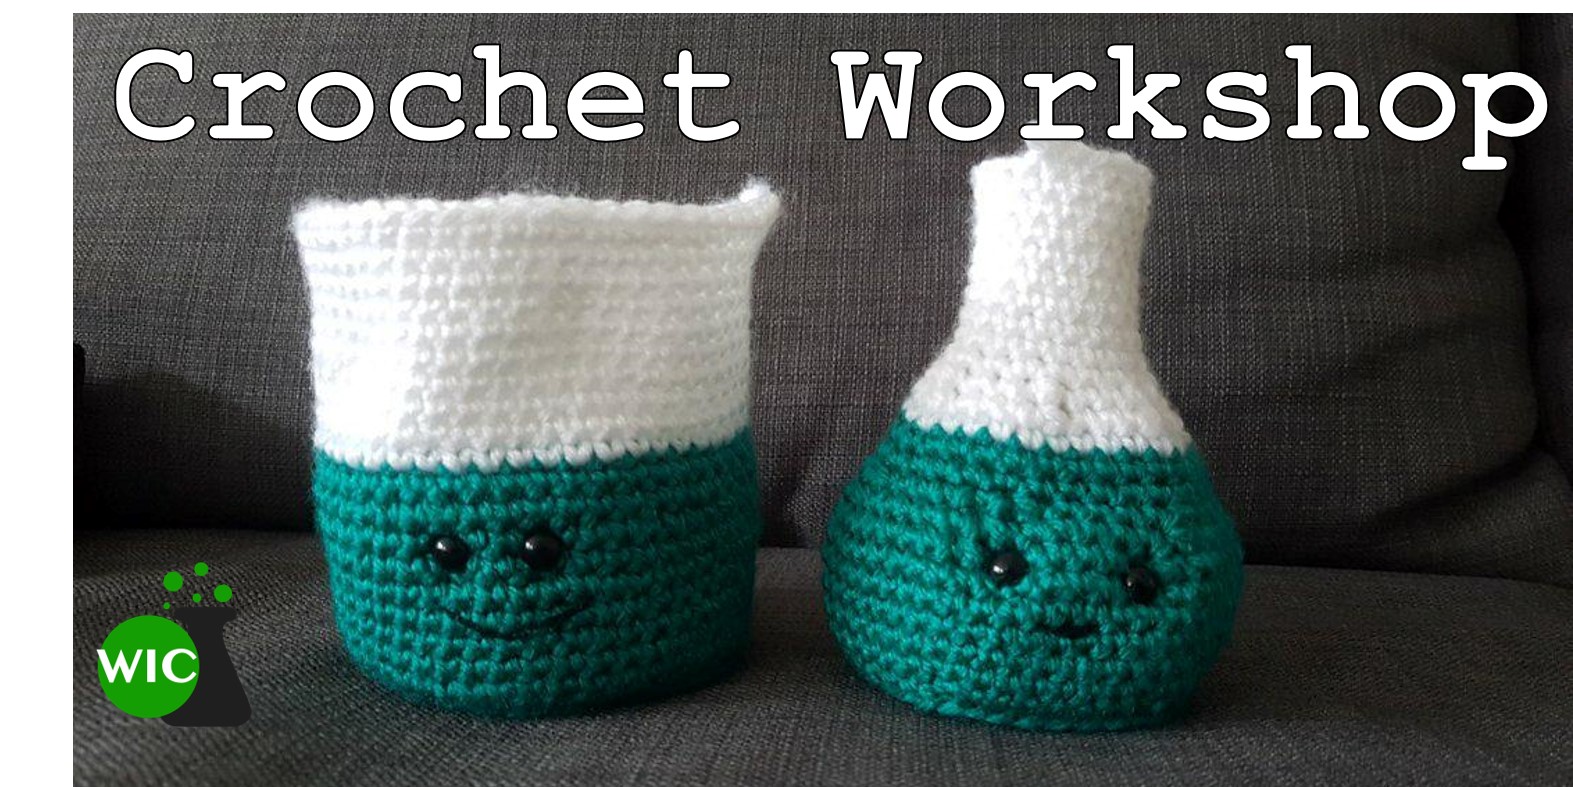 Crochet Workshop – Make Your Own Glassware